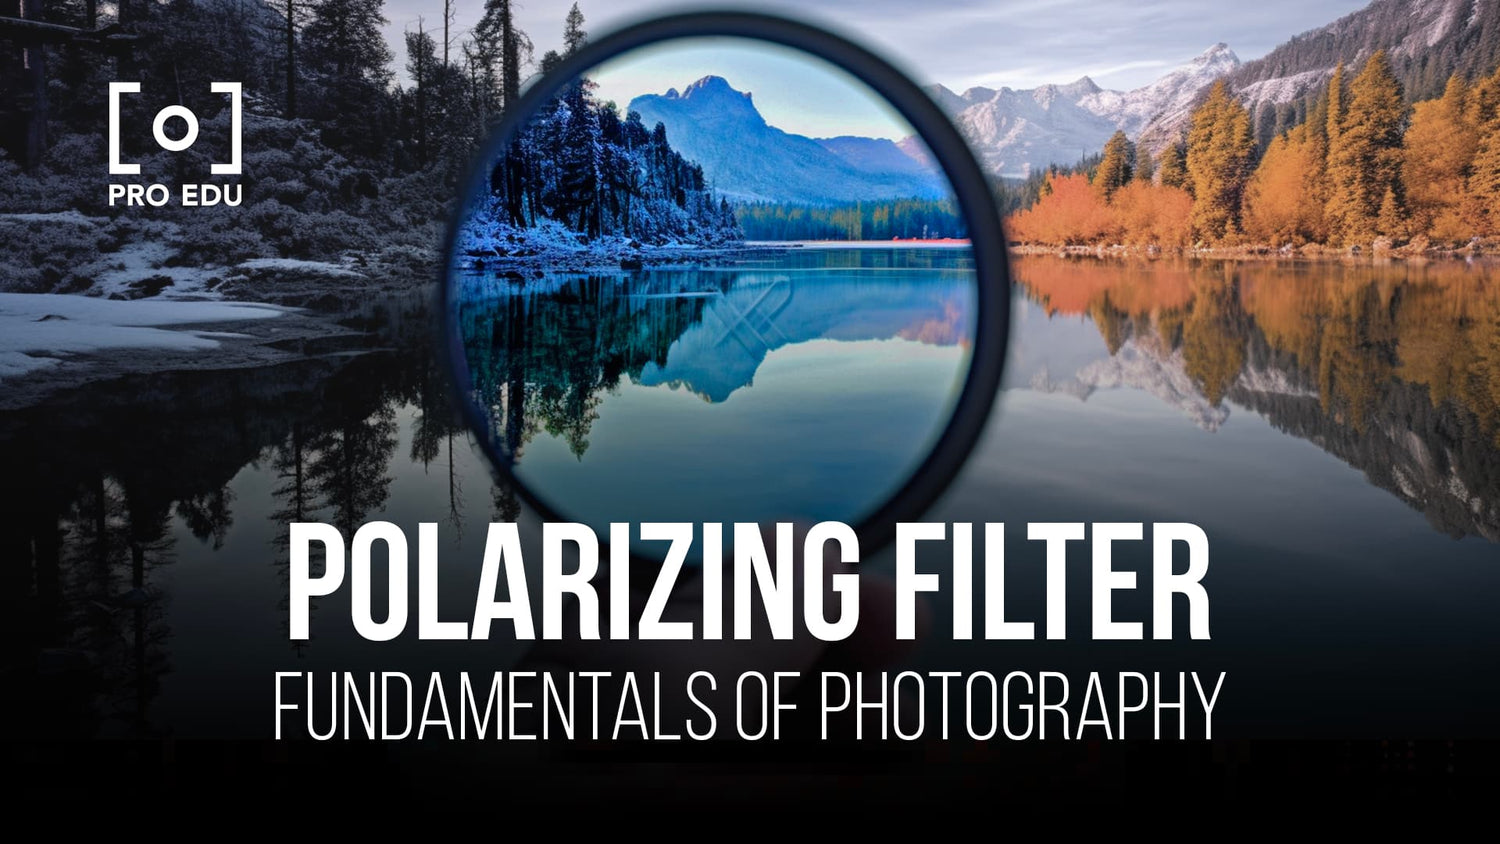 Para que sirve un filtro polarizador en fotografia - ArtSpace